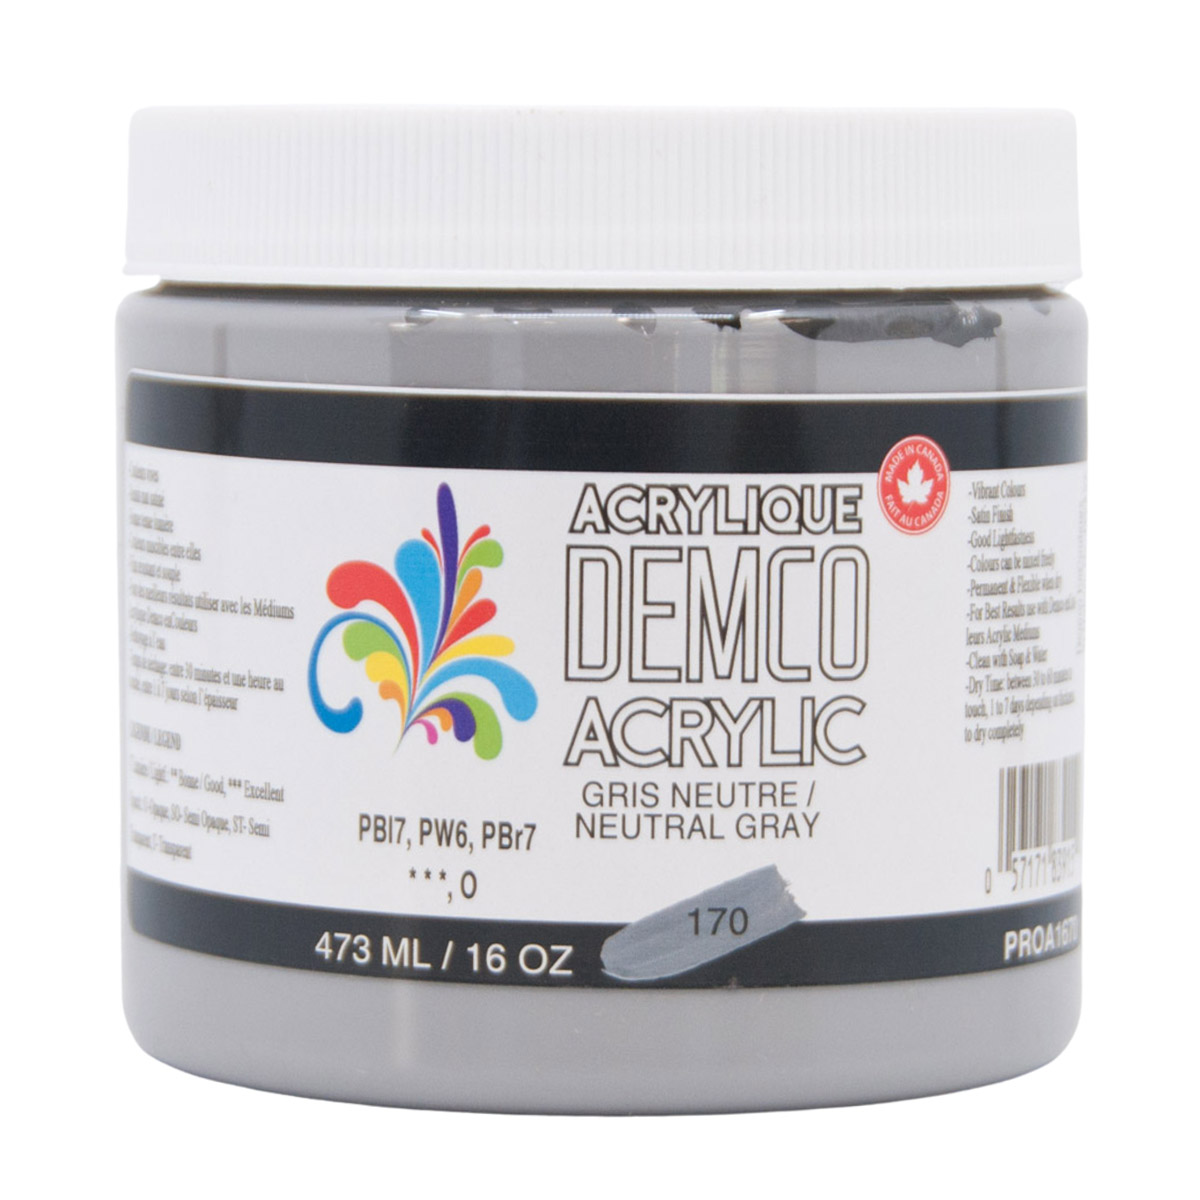 Demco Acrylic Neutral Grey 473ml/16oz